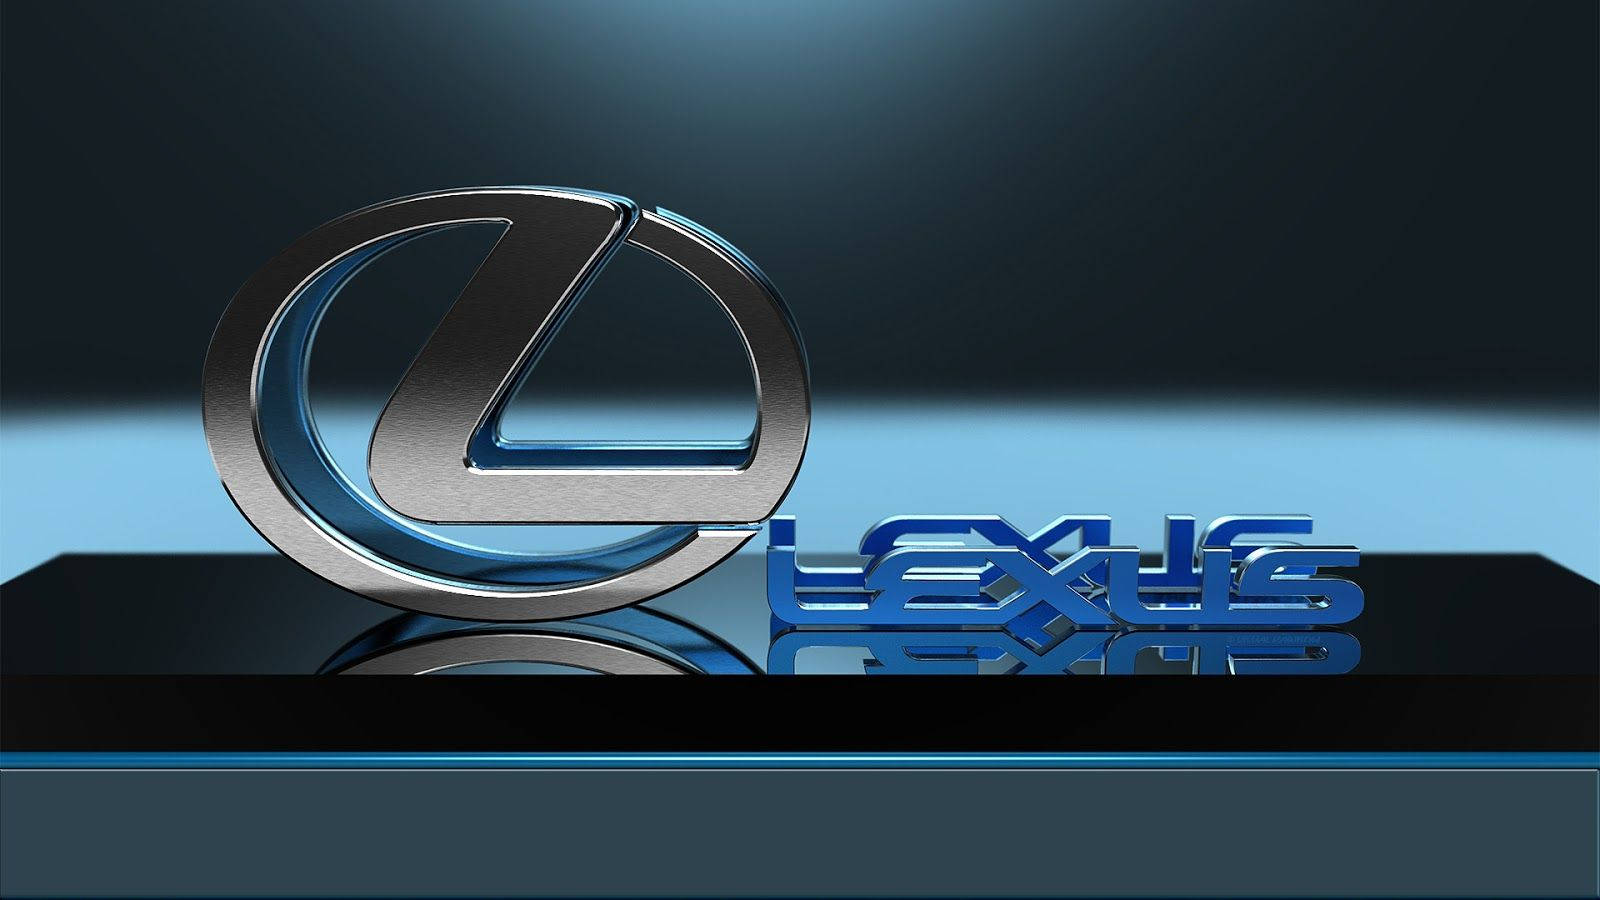 Cool Silver Lexus Logo